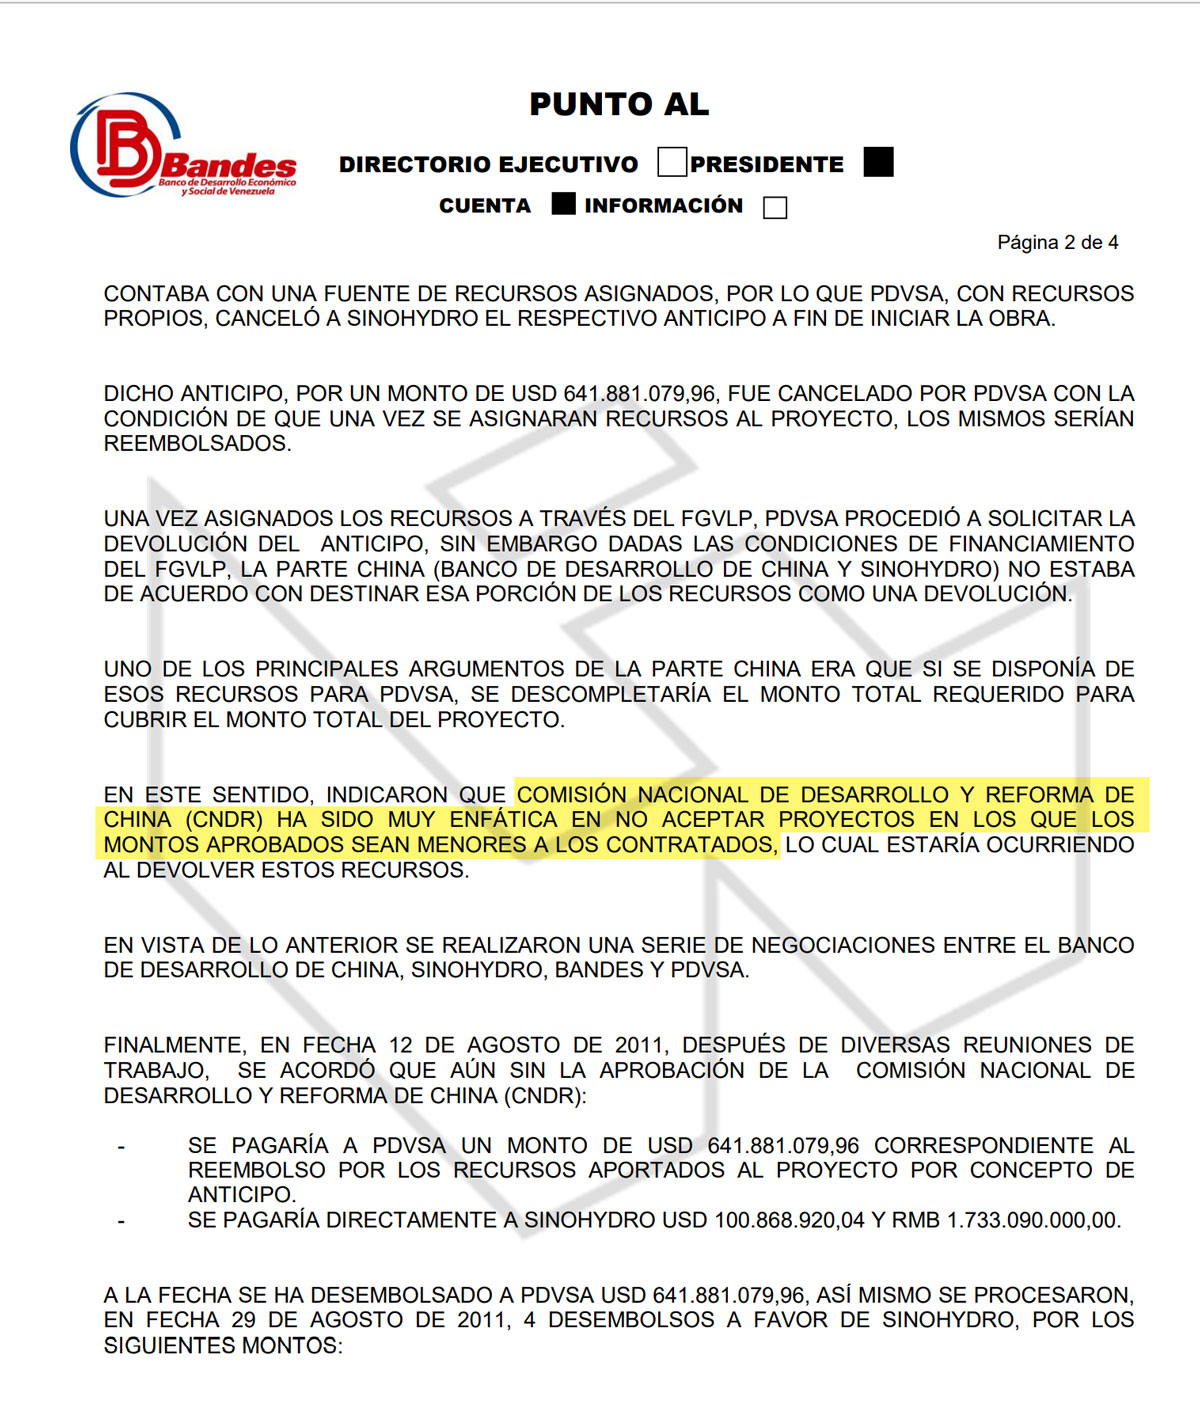 Documents from the Venezuelan Social and Economic Development Bank